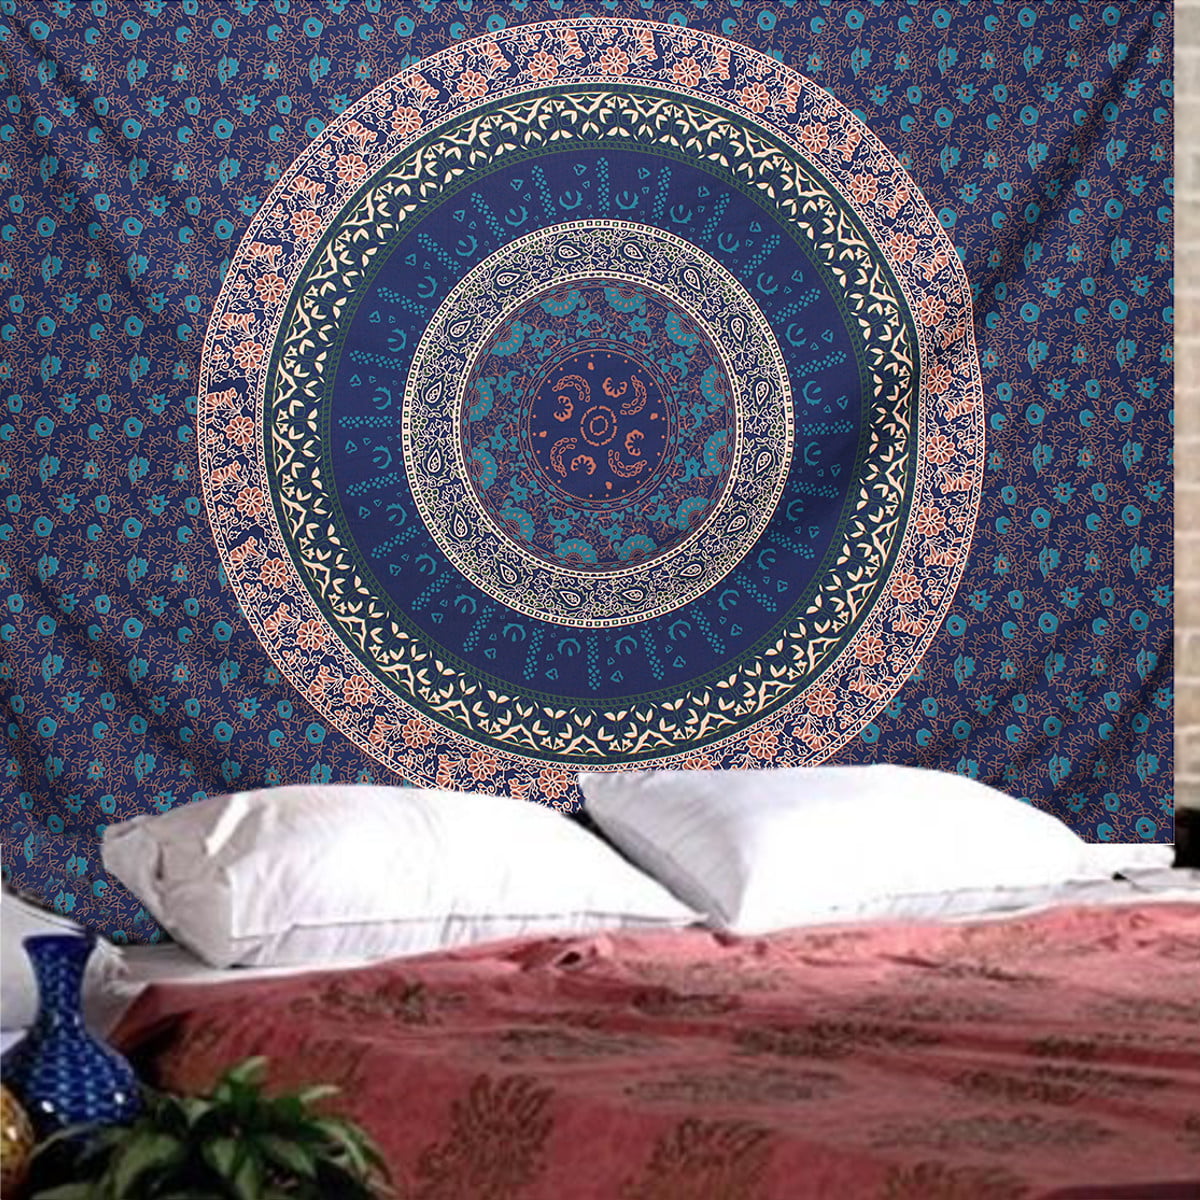 Mandala Tapestry Indian Wall Hanging Bohemian Hippie Bedspread Bed Sheet Throw